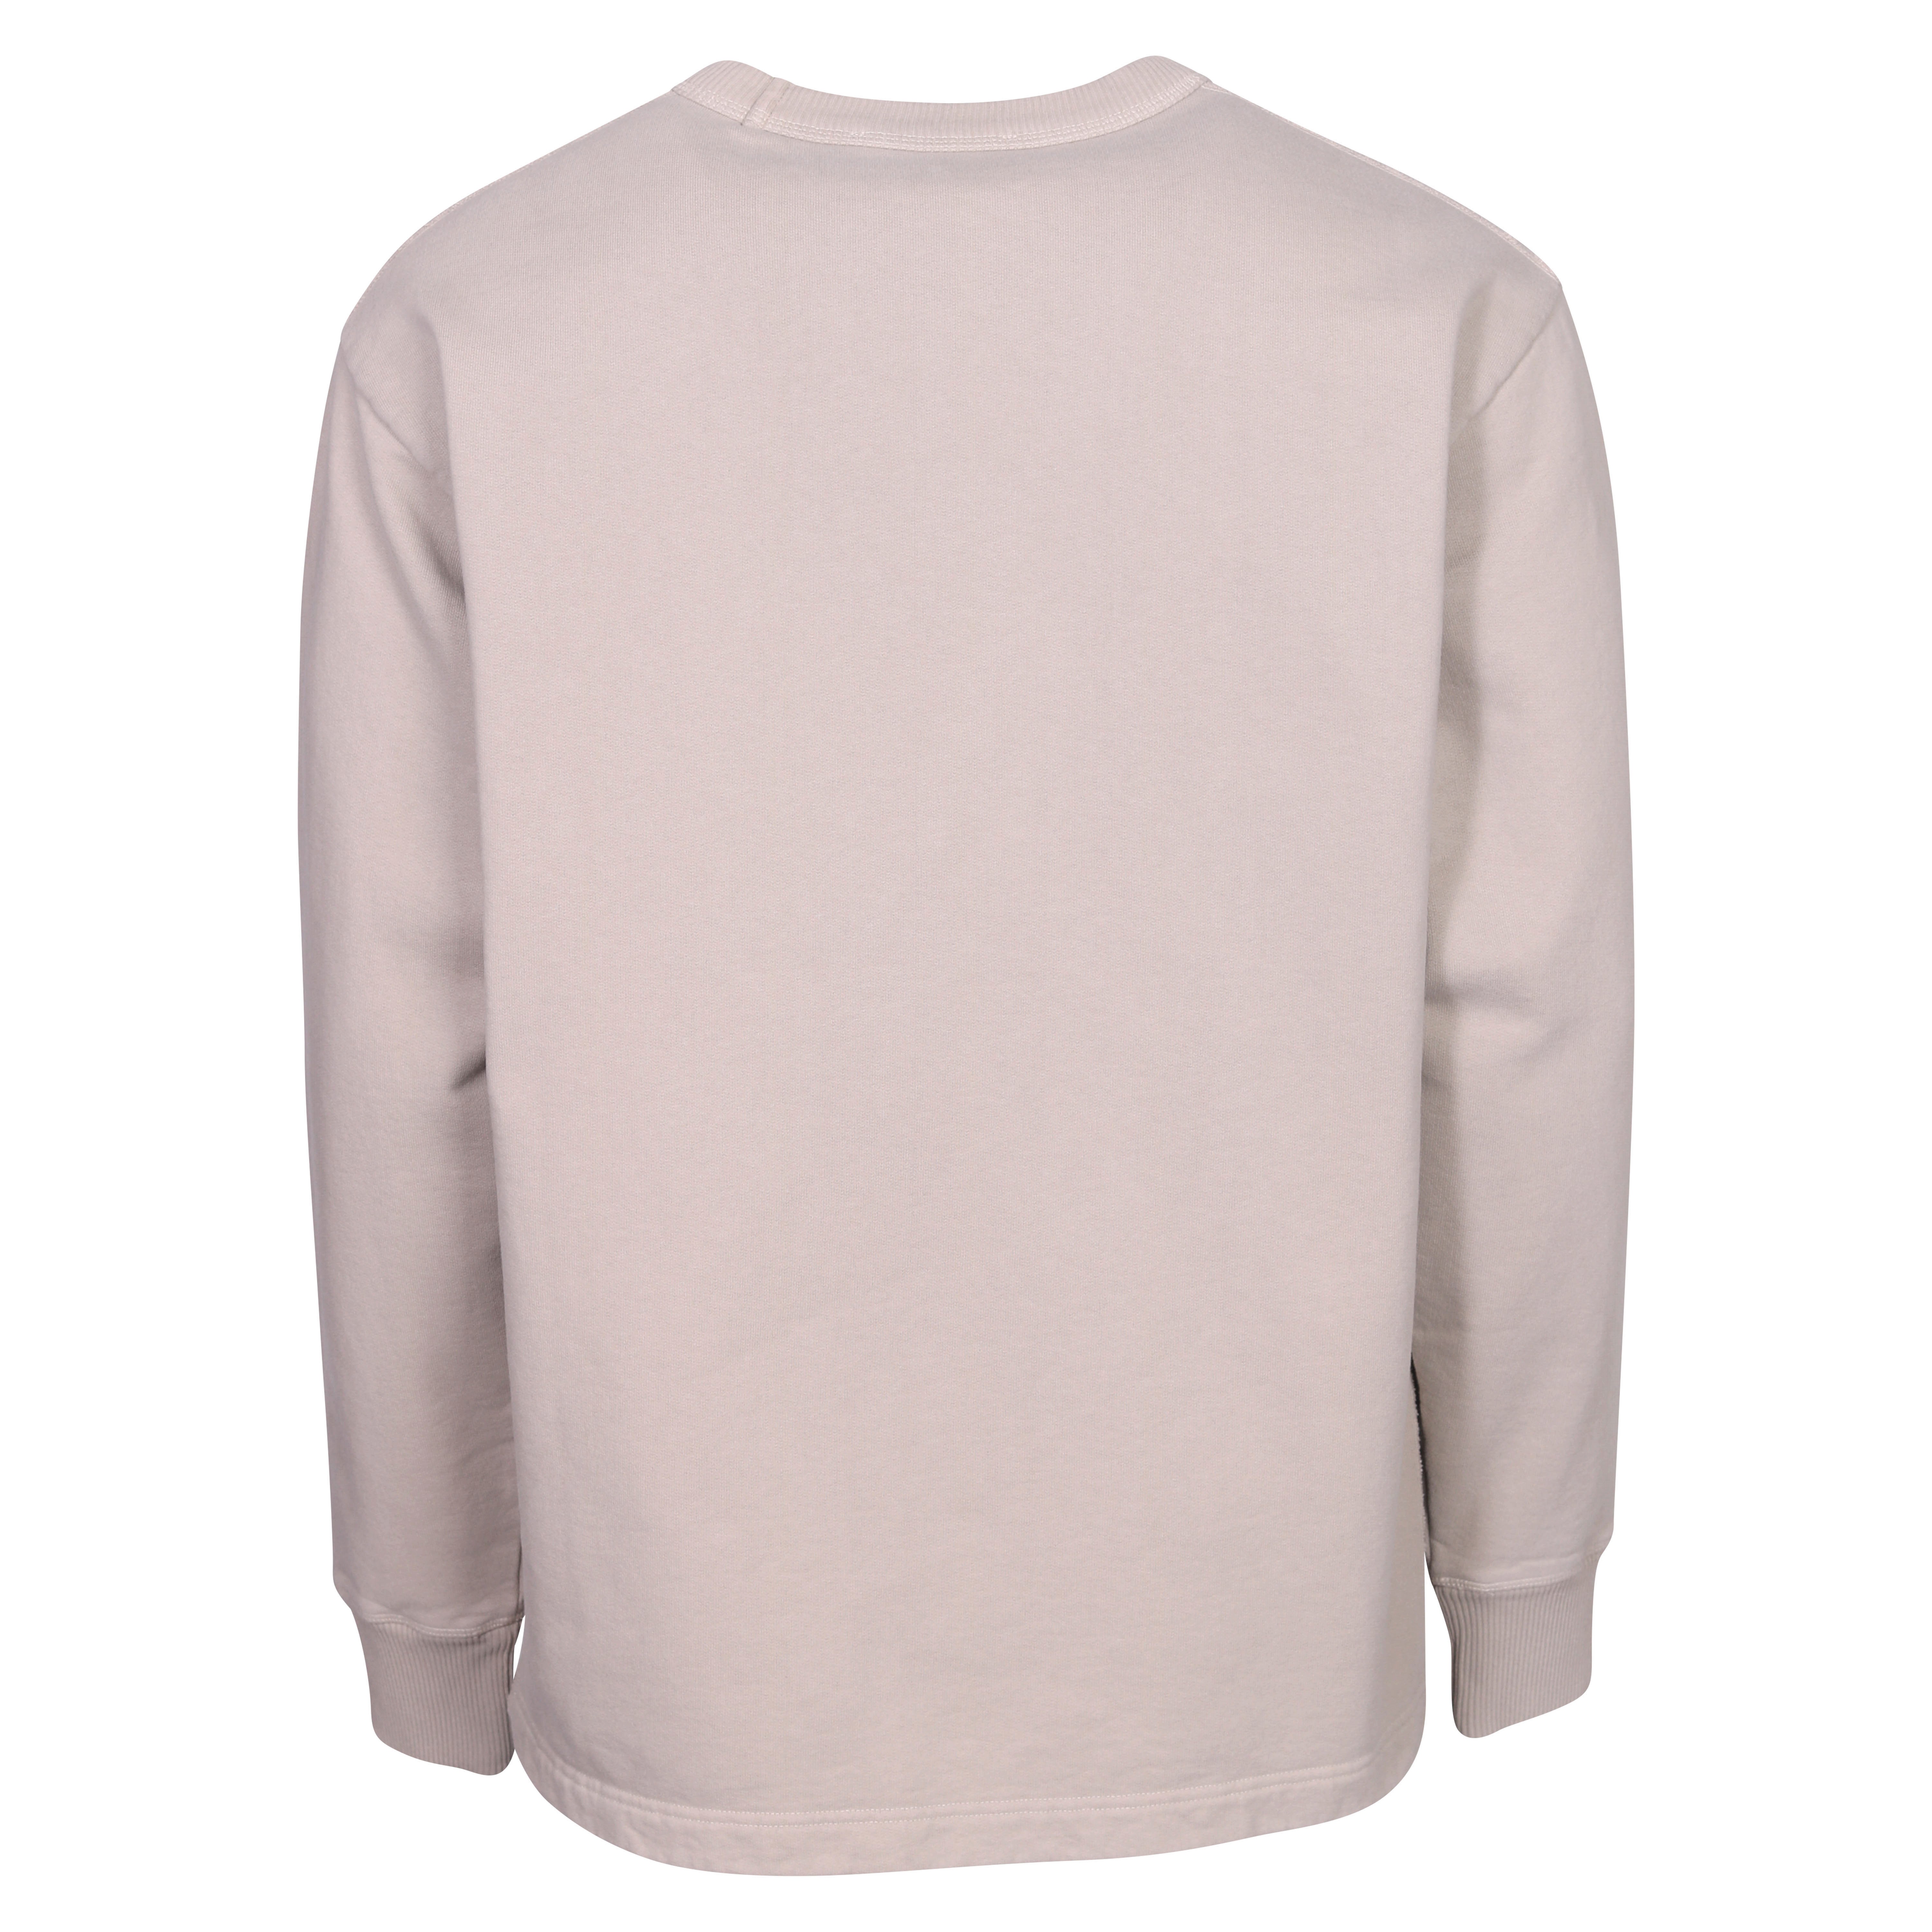 Acne Studios Stamp Sweatshirt in Oyster Grey S